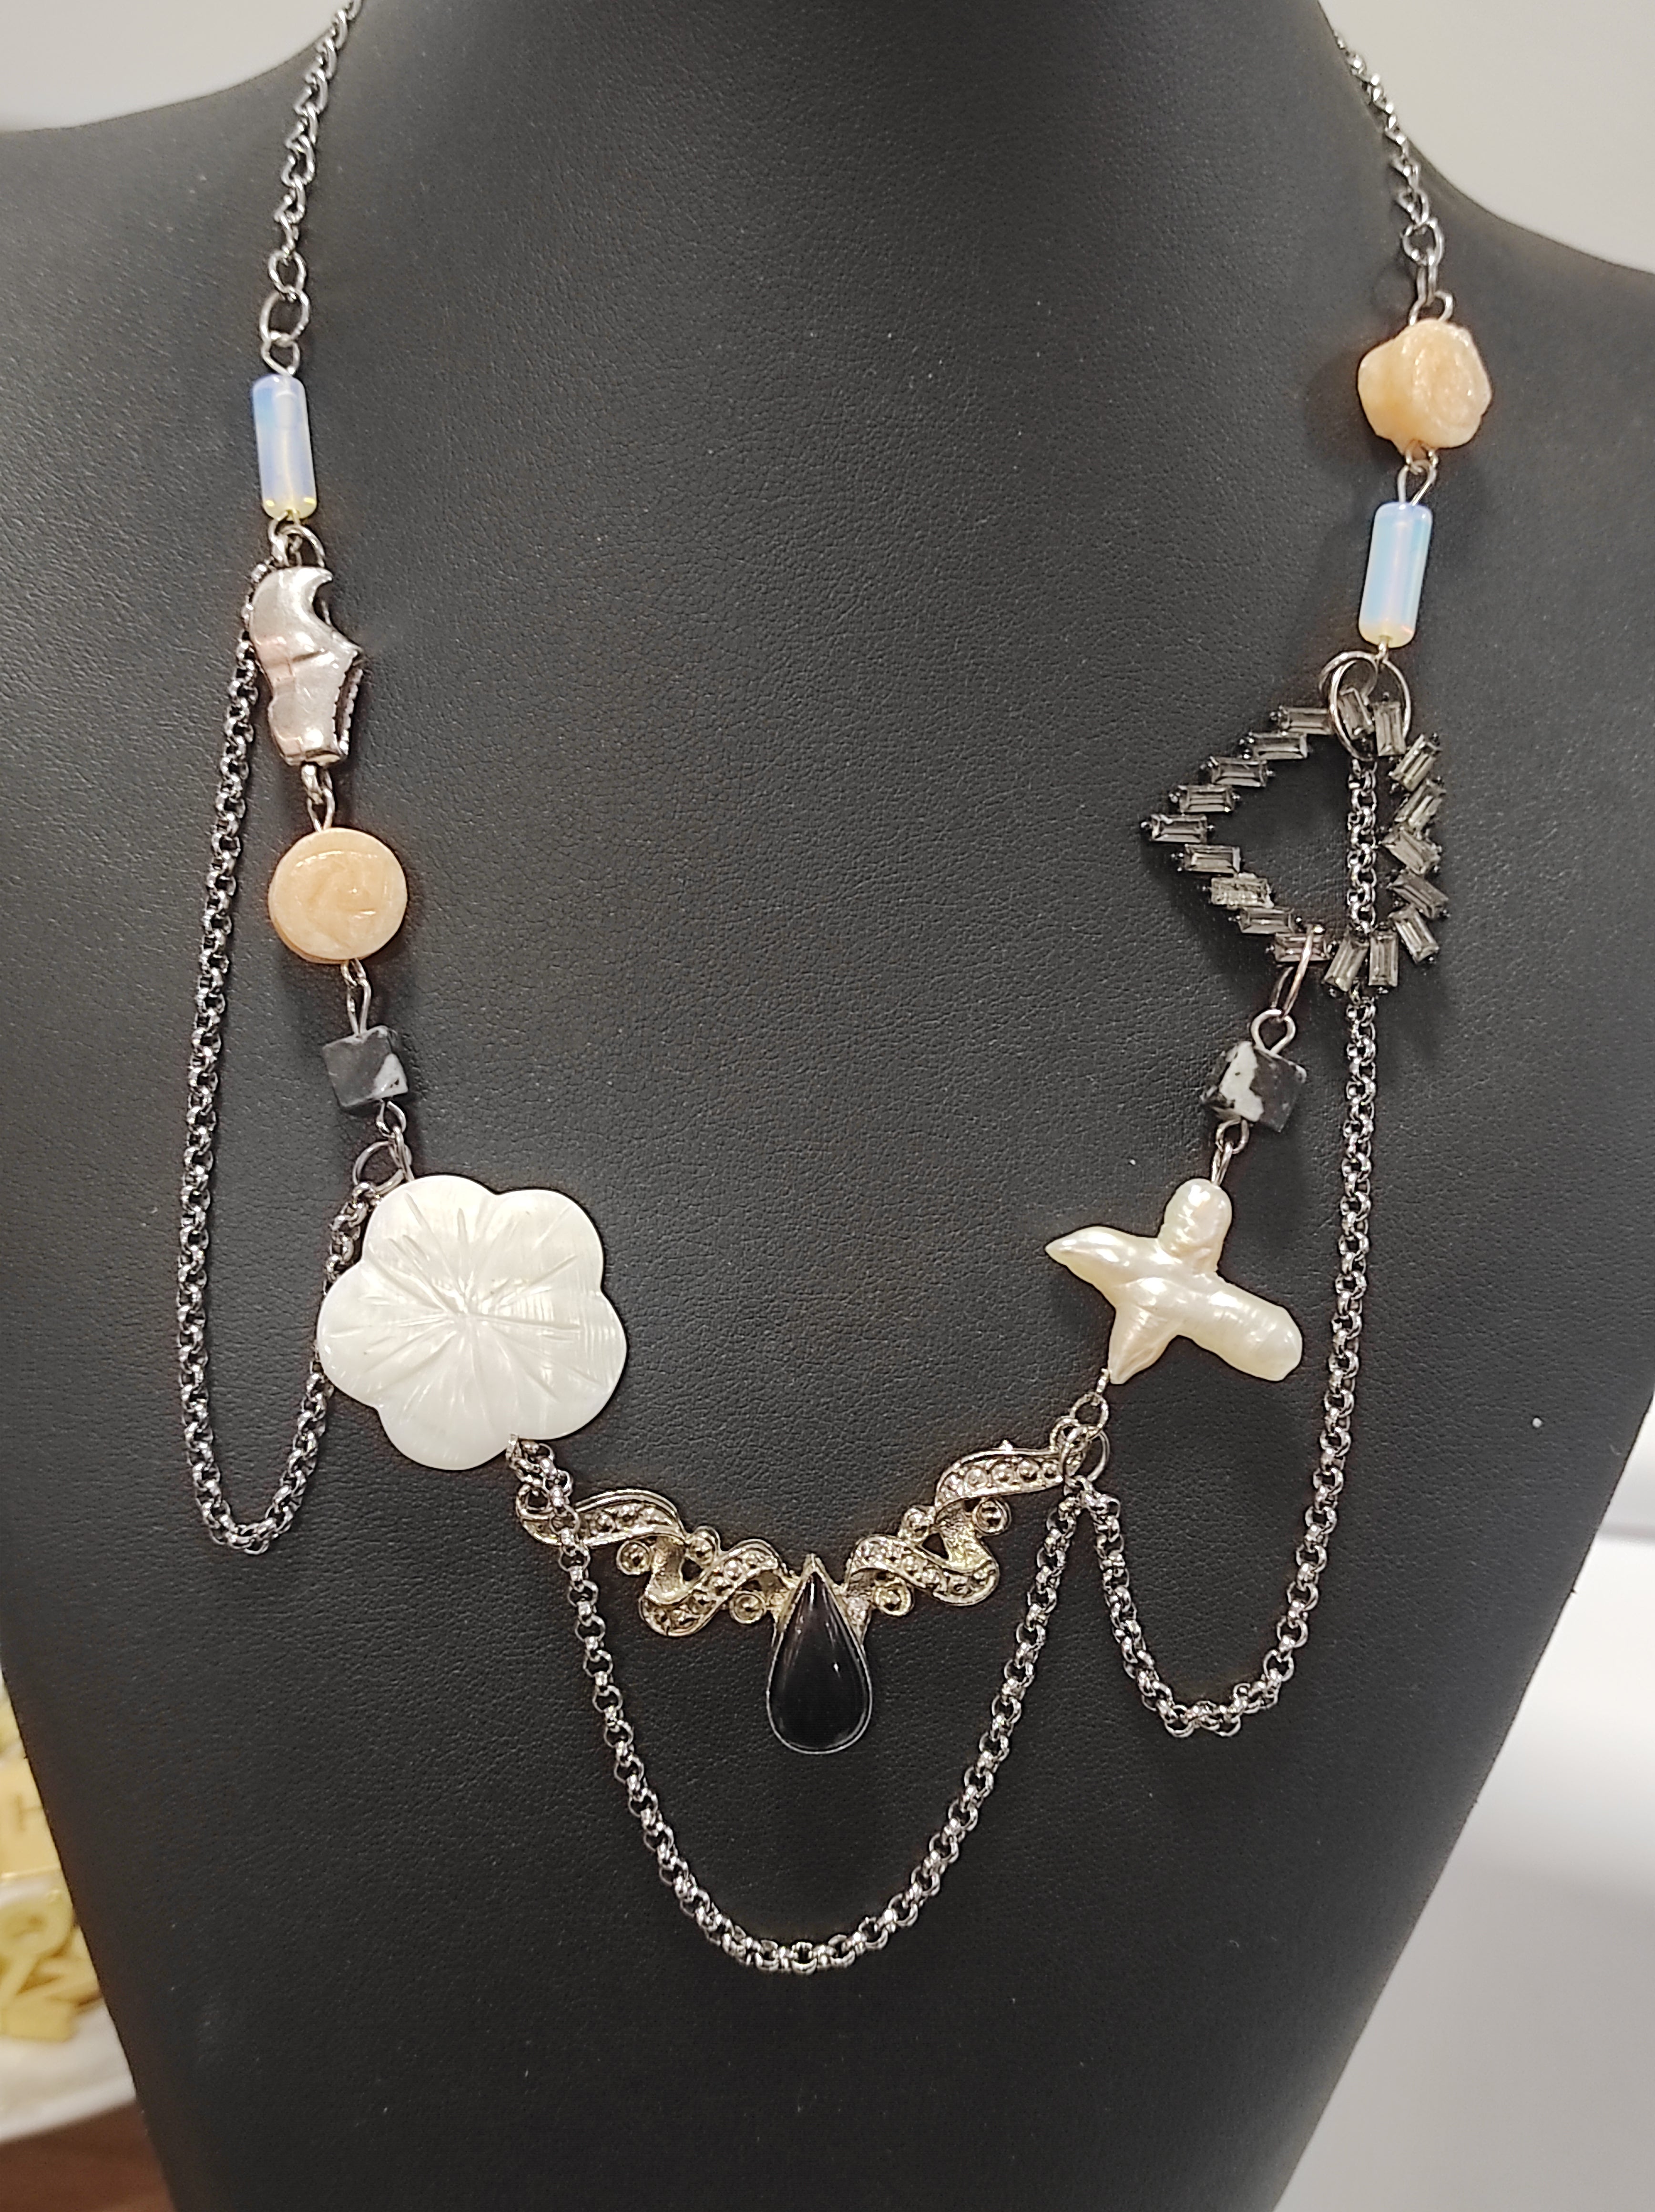 Vintage collage necklace